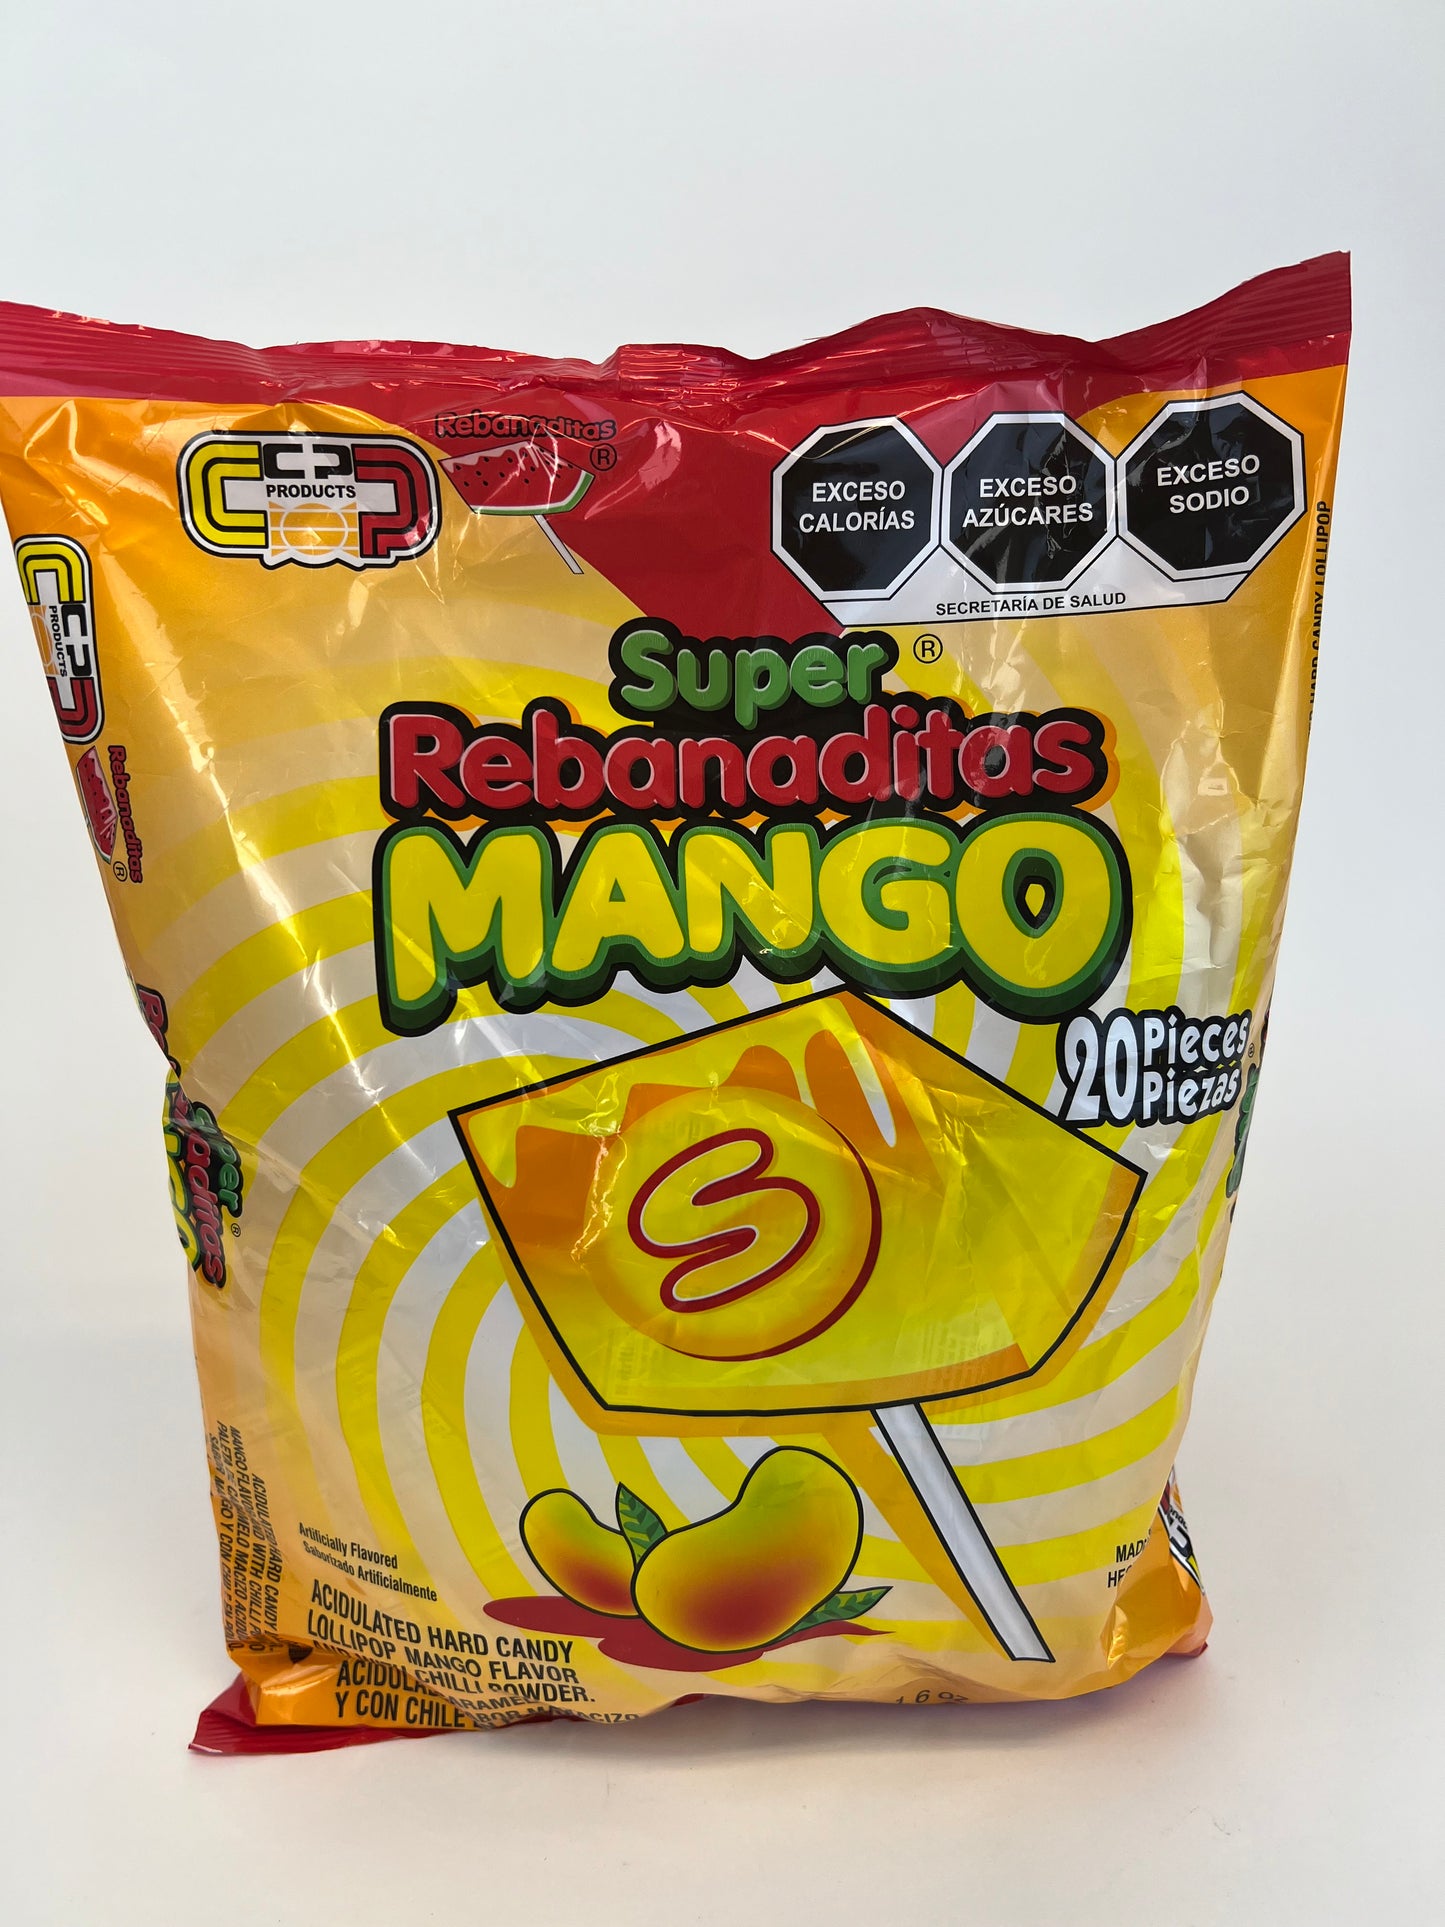 Super Rebanaditas Mango